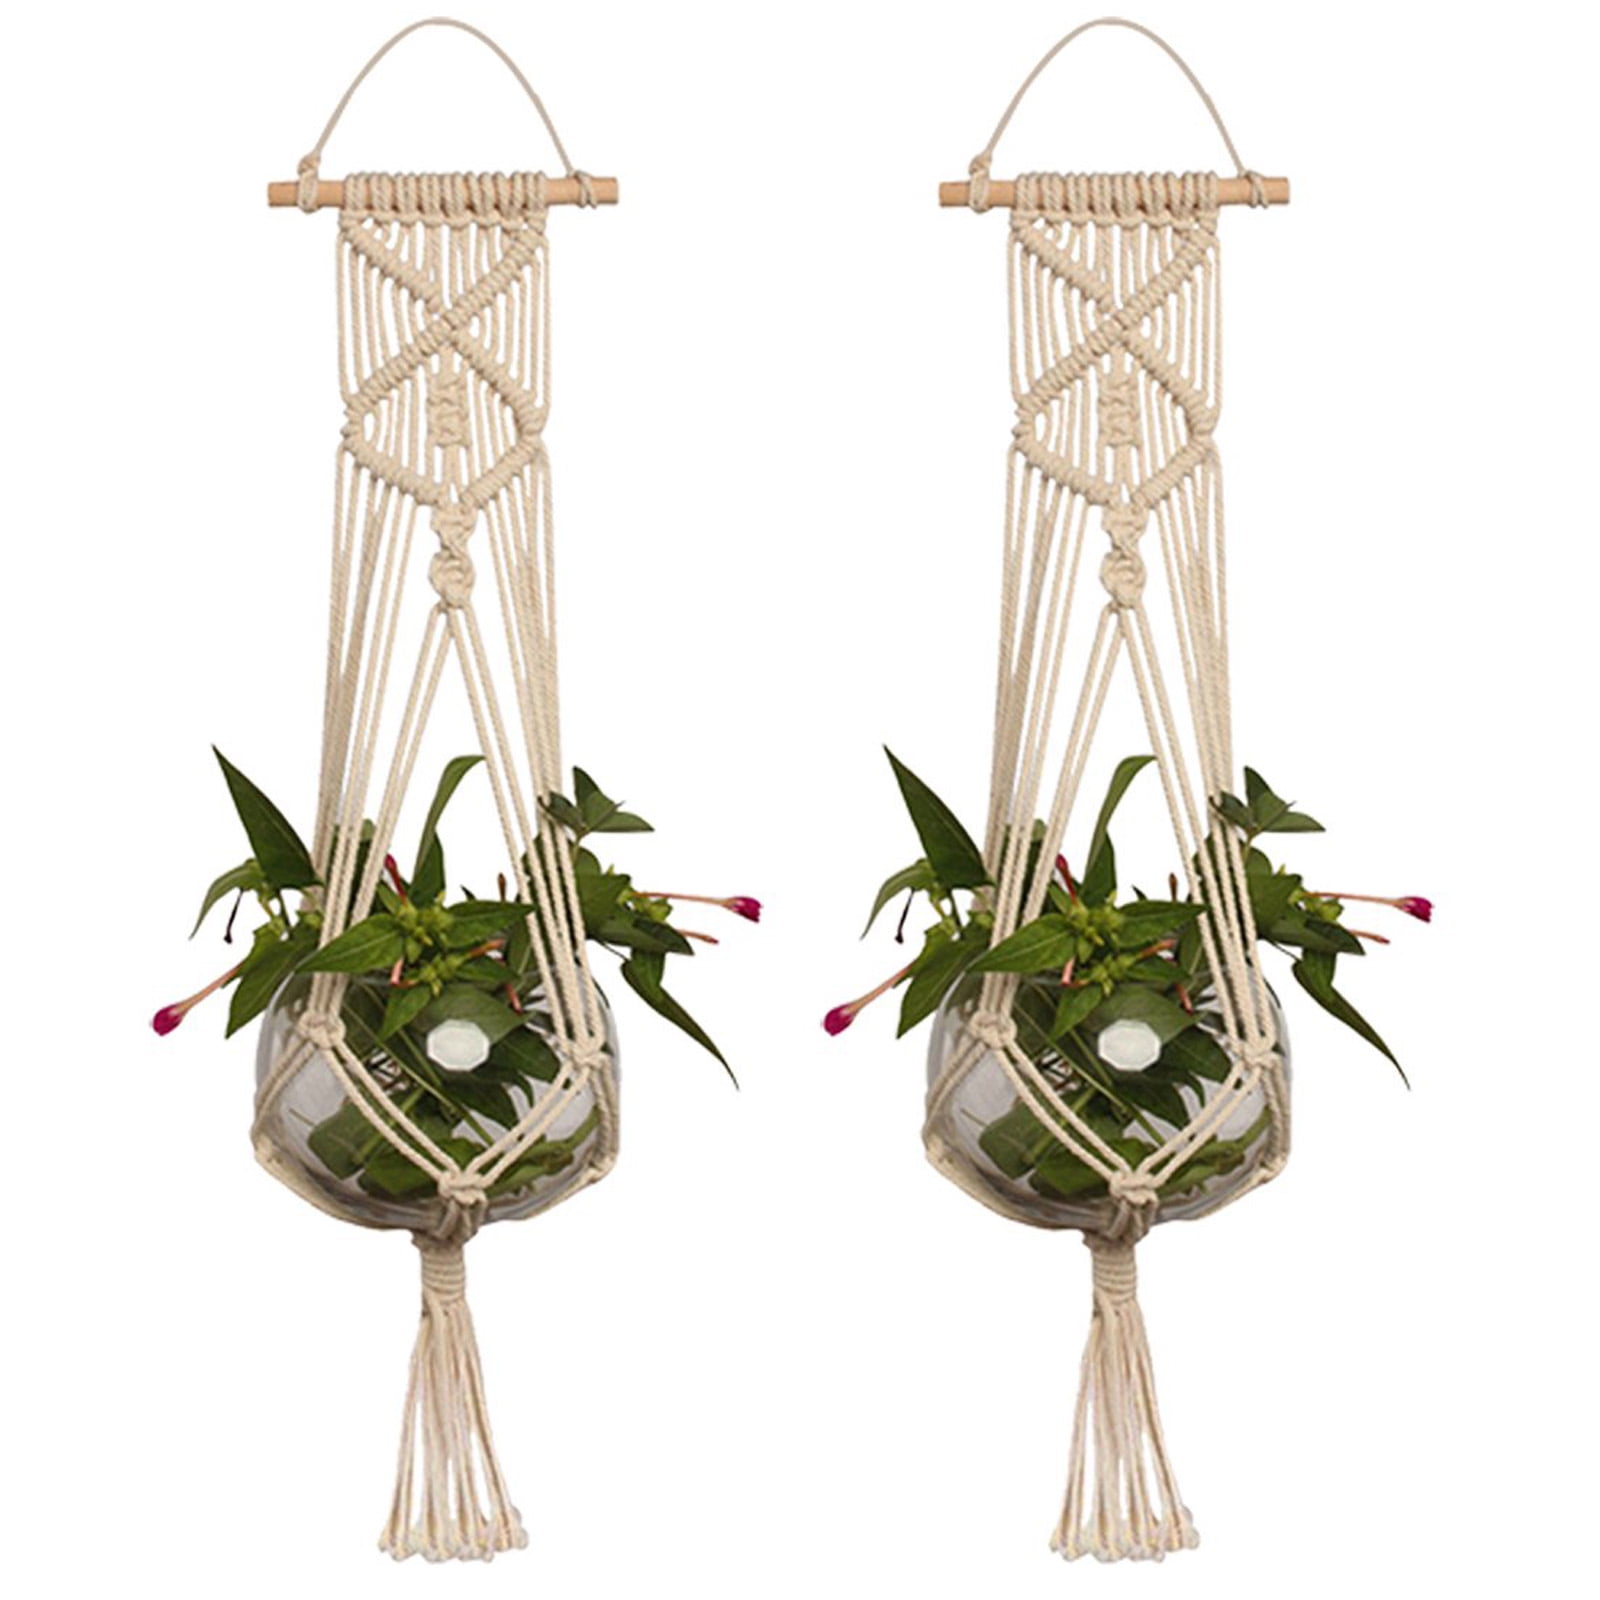 Handcrafted Braided Natural Jute Macrame Plant Hanger Pot Holders Hanging Basket 